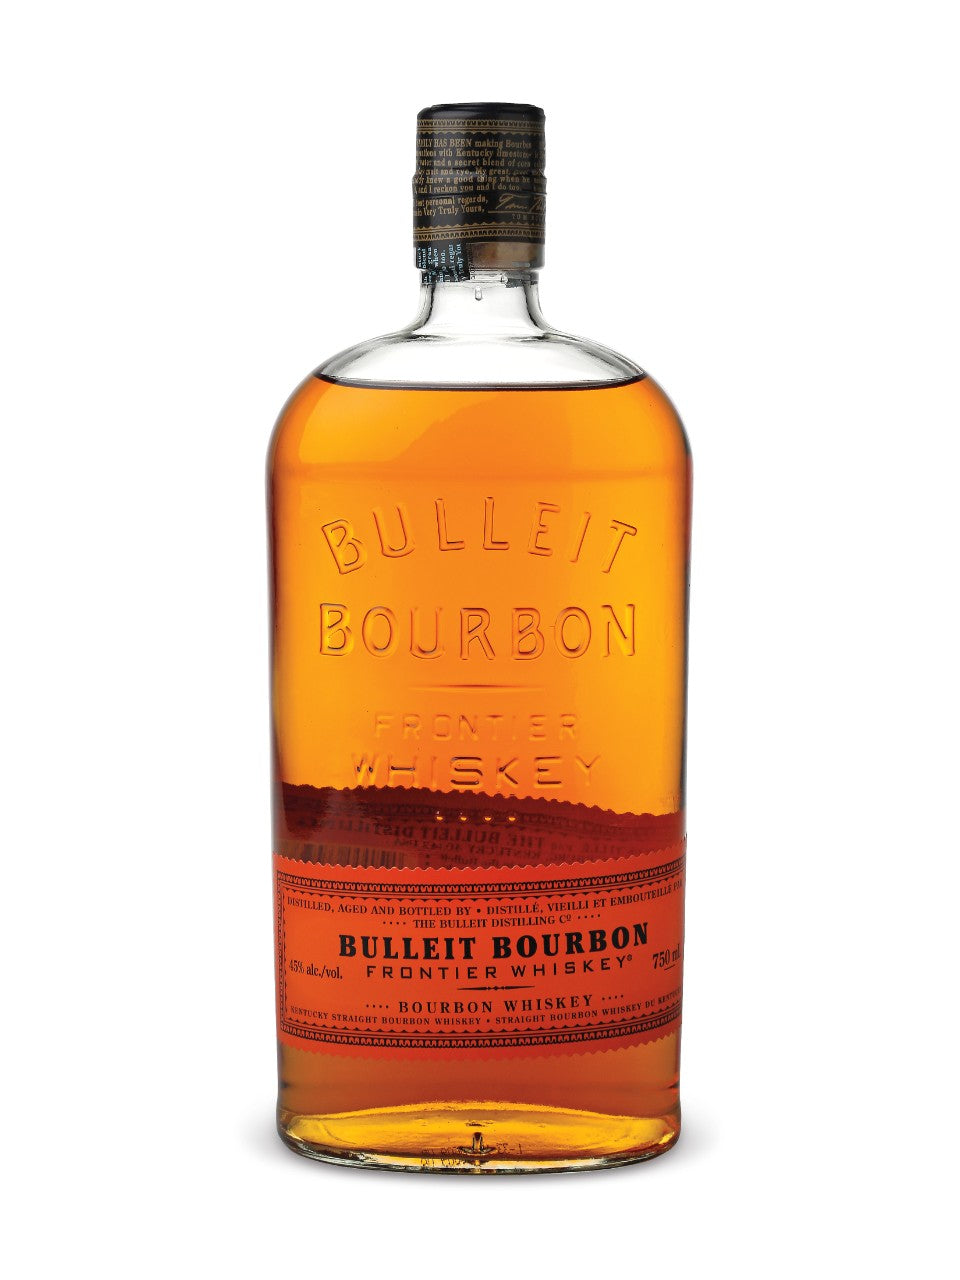 Bulleit Bourbon Frontier Whiskey 750 mL bottle